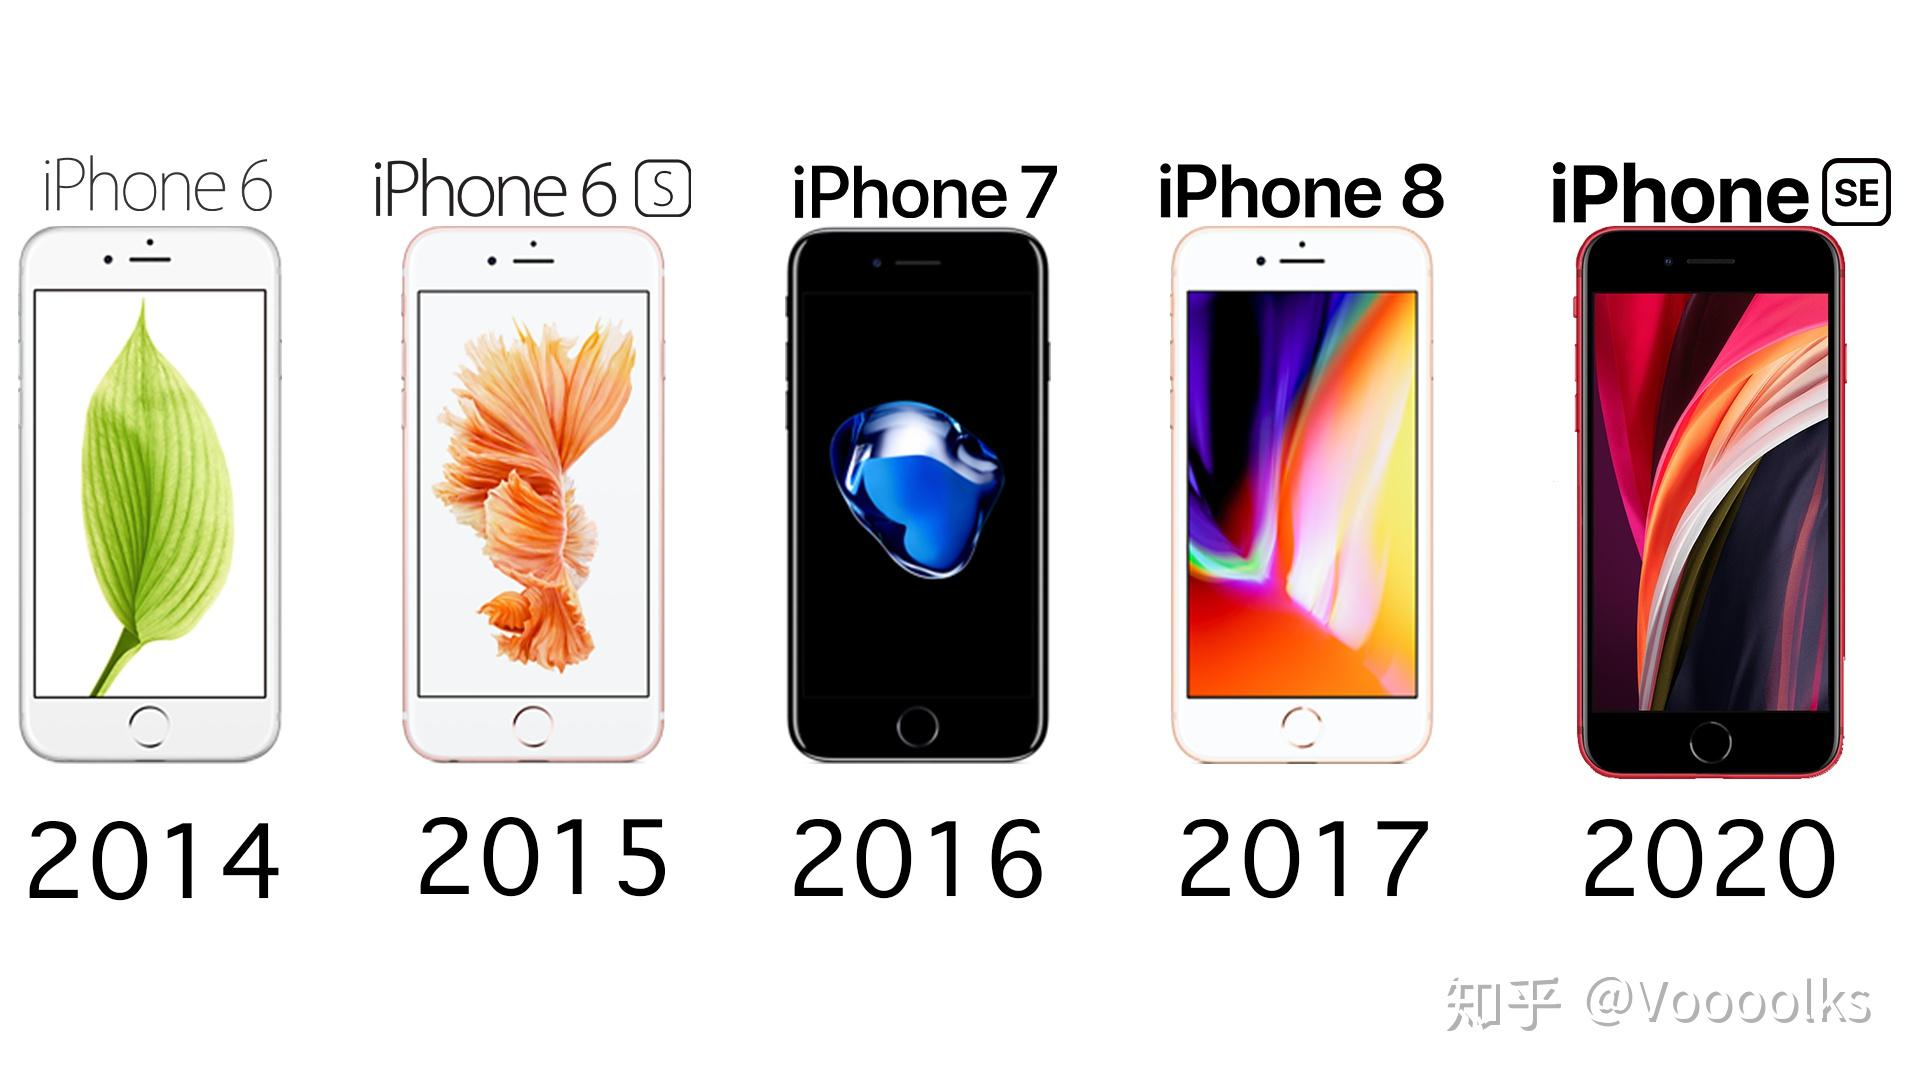 iPhone，在此——苹果iPhone系列智能手机发展史（上）2007-2013_哔哩哔哩_bilibili